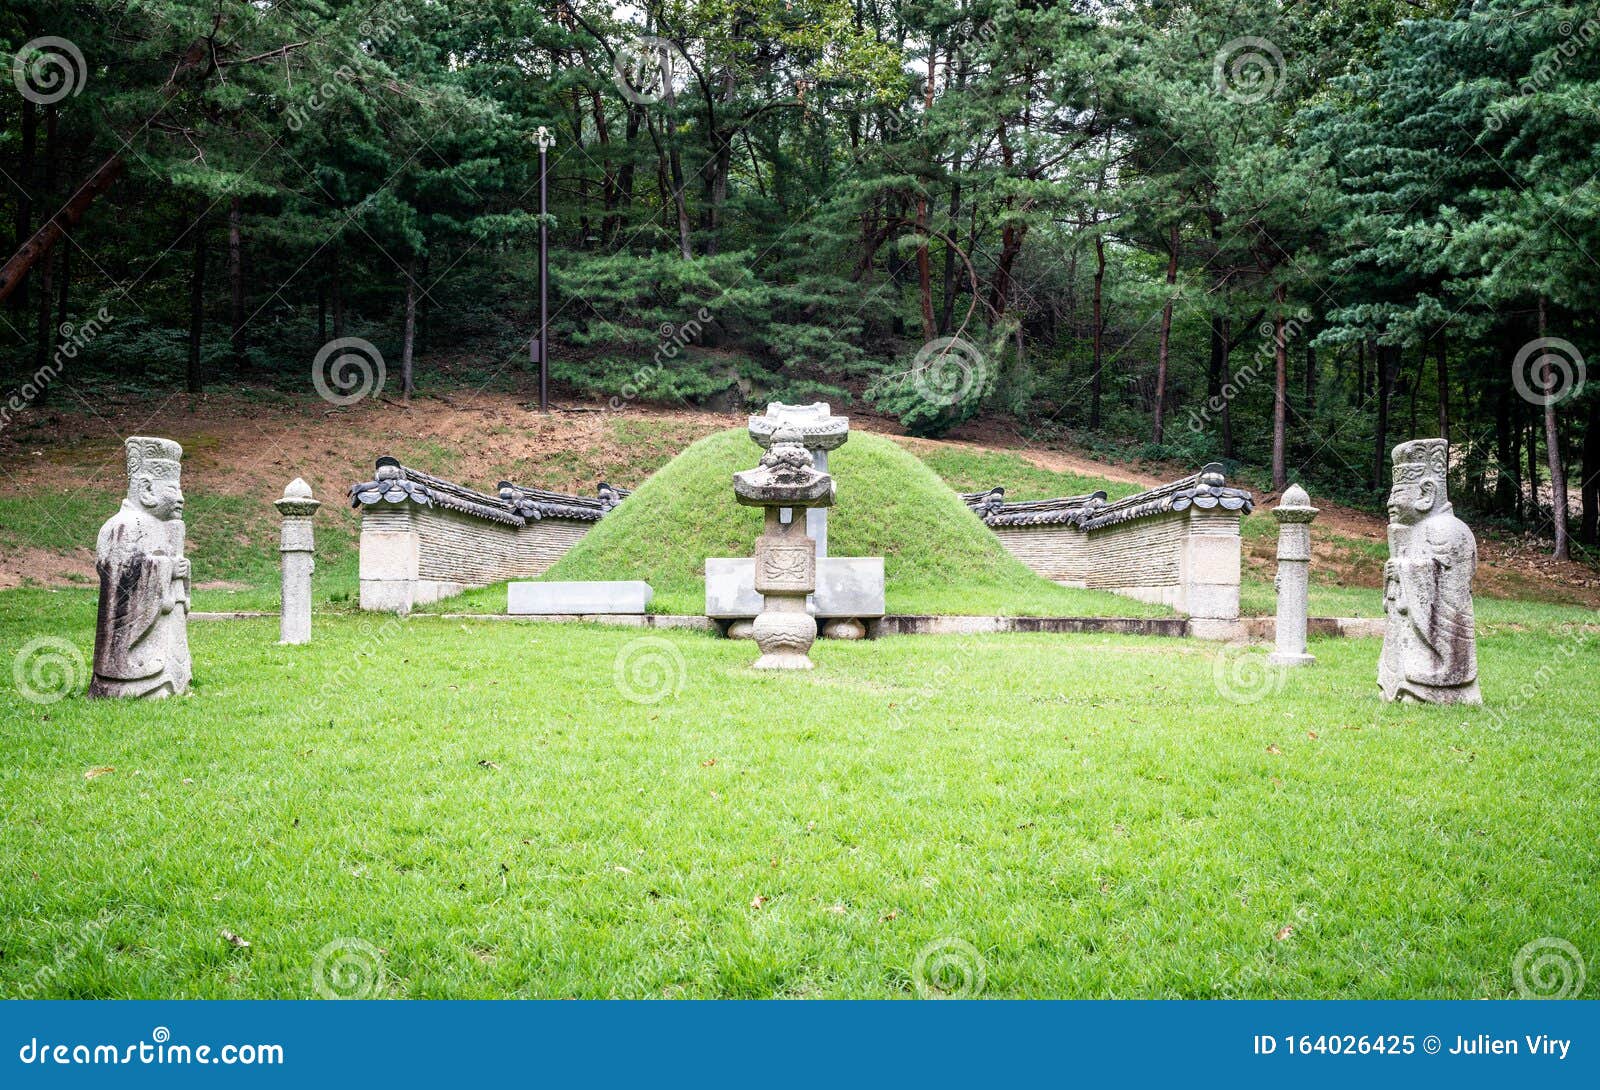 daebinmyo tomb of lady jang a royal concubine at seo-oreung royal burial site of the joseon dynasty cluster in south korea